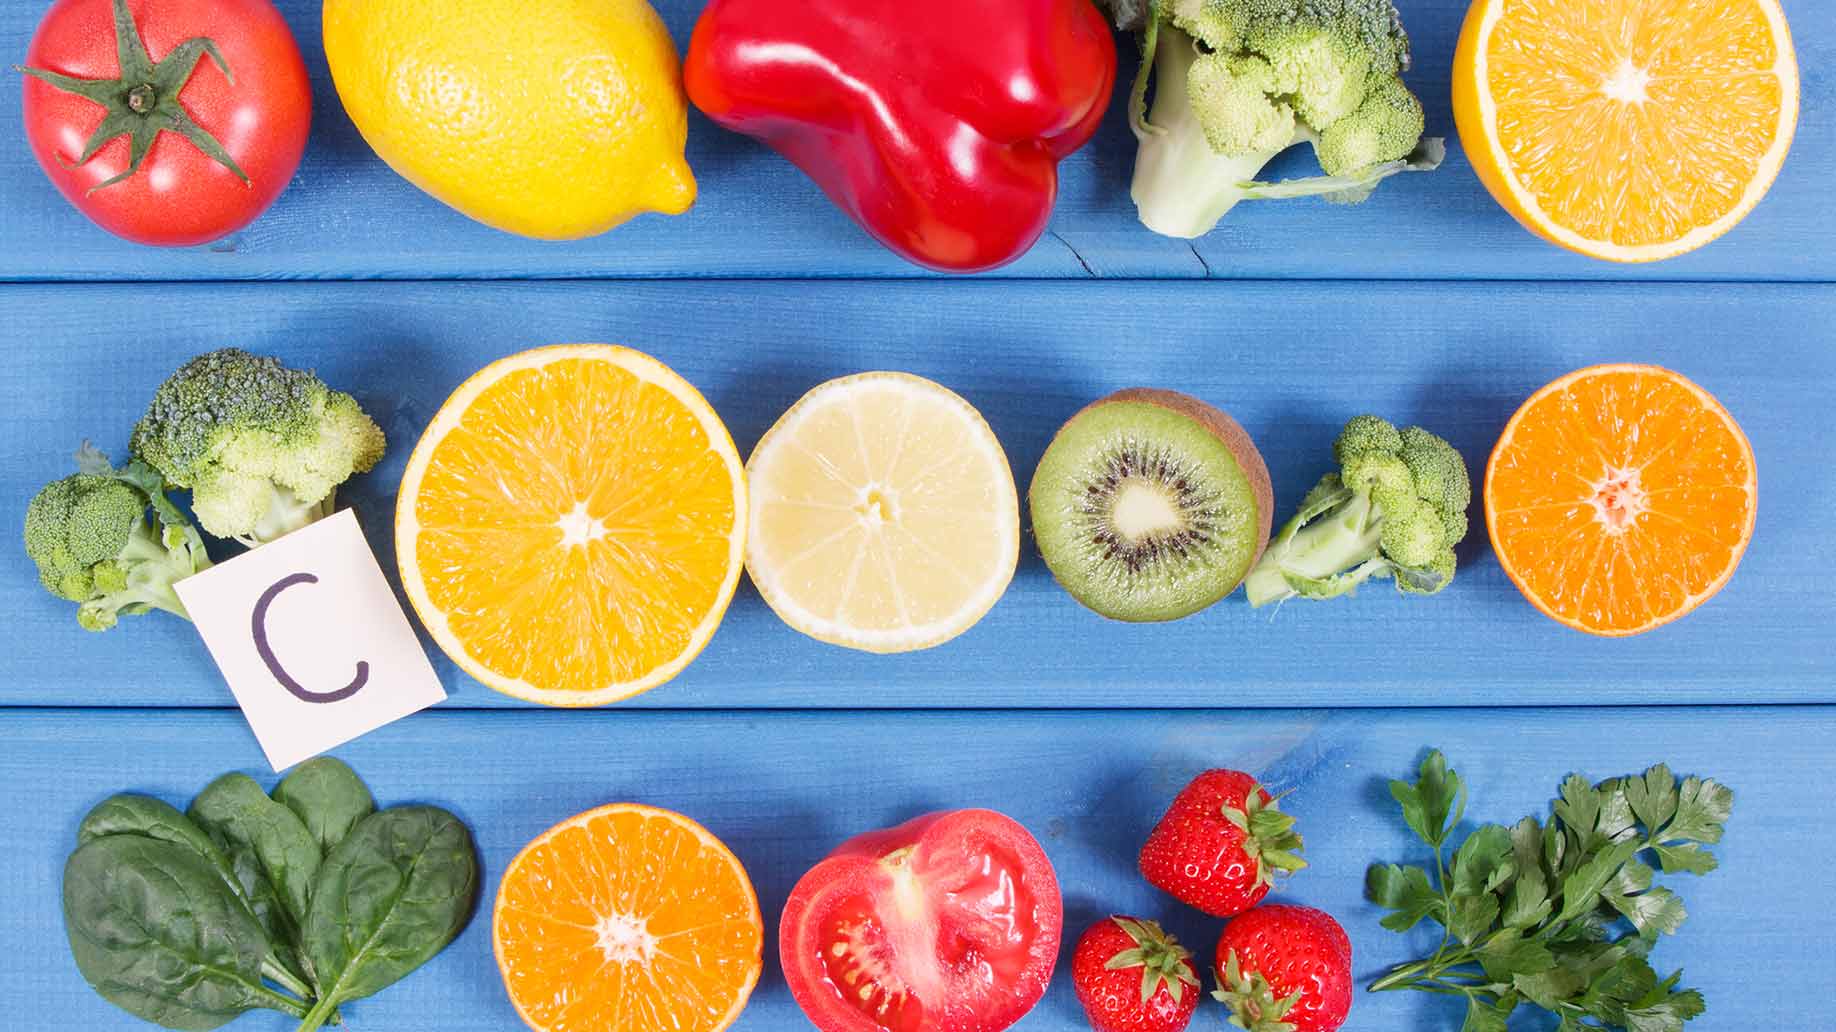 vitamin c broccoli spinach orange kiwi peppers tomatoes strawberries lemon urinary tract infection uti natural remedies